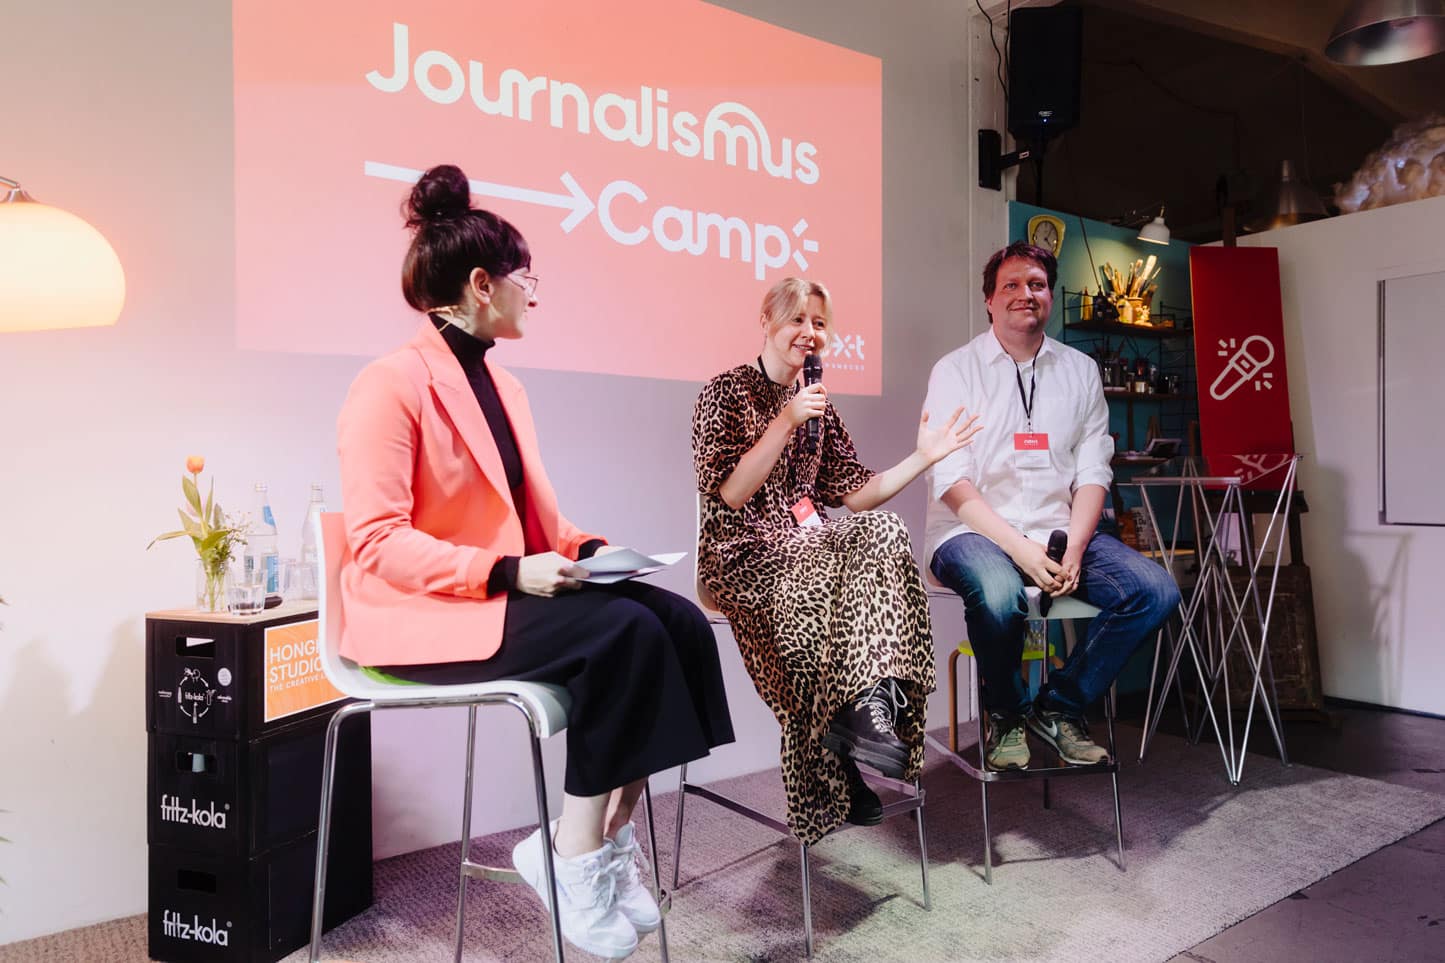 Journalismus Camp